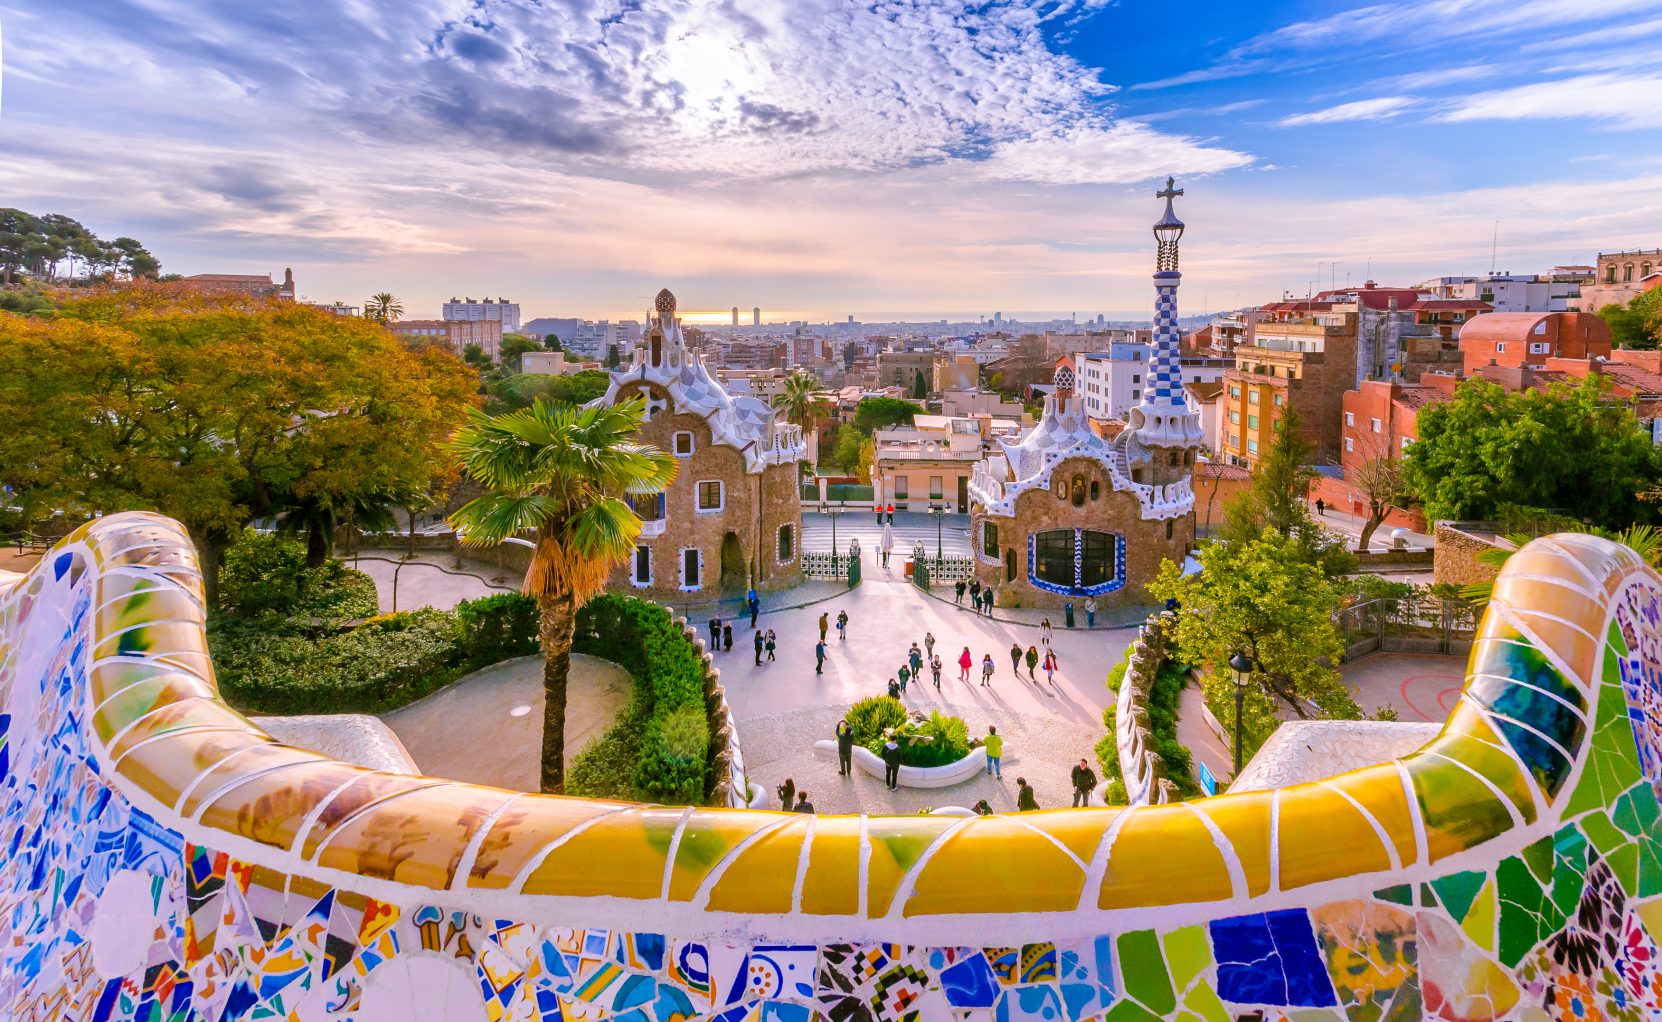 Barcelona tourist attraction - Gaudi